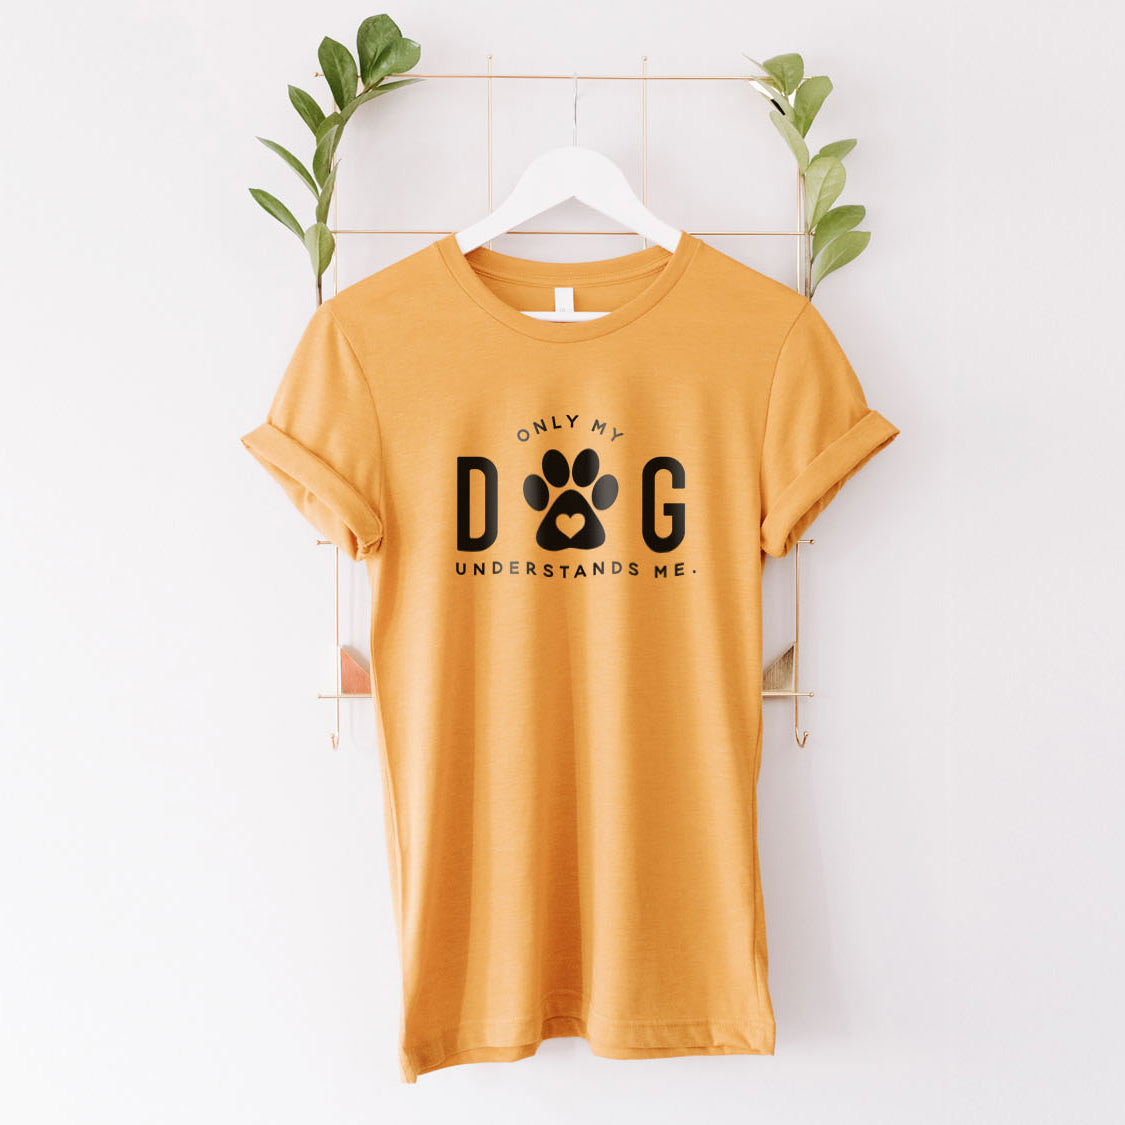 Only My Dog Understands Me T-shirt - Fun Pet Love Minimal Design Printed Tee Shirt